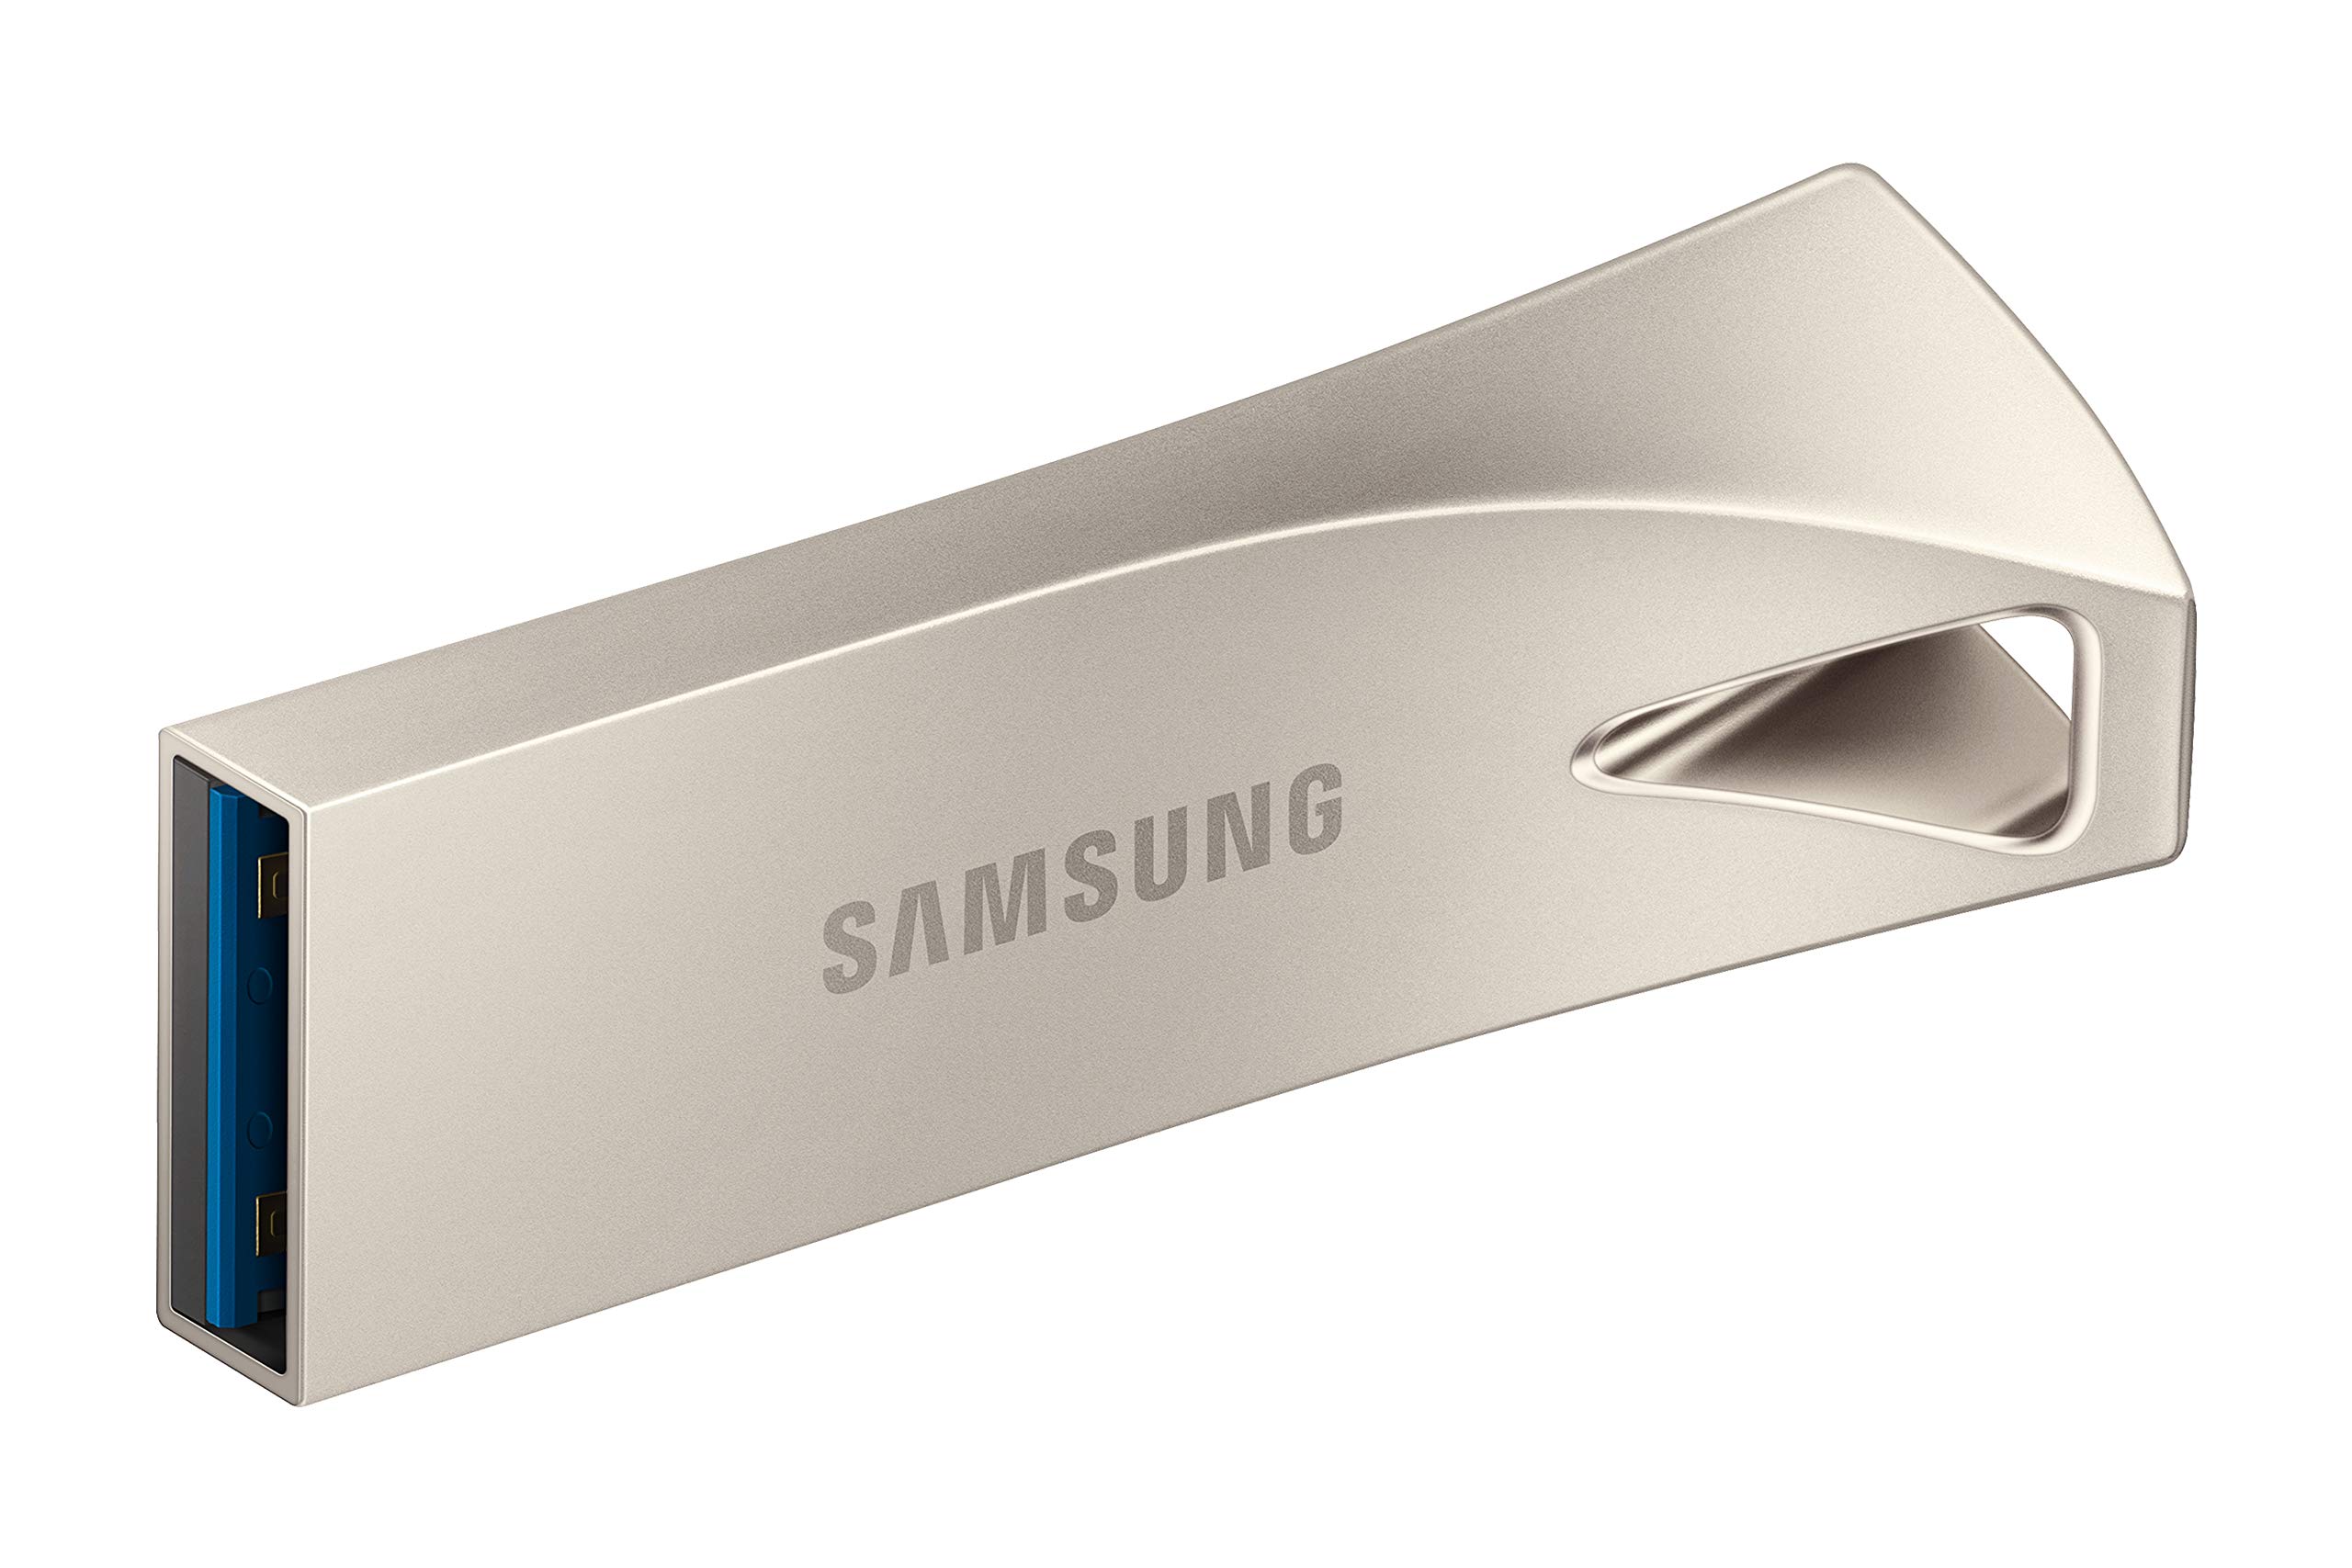 $21.99: 256GB Samsung BAR Plus USB 3.1 Flash Drive